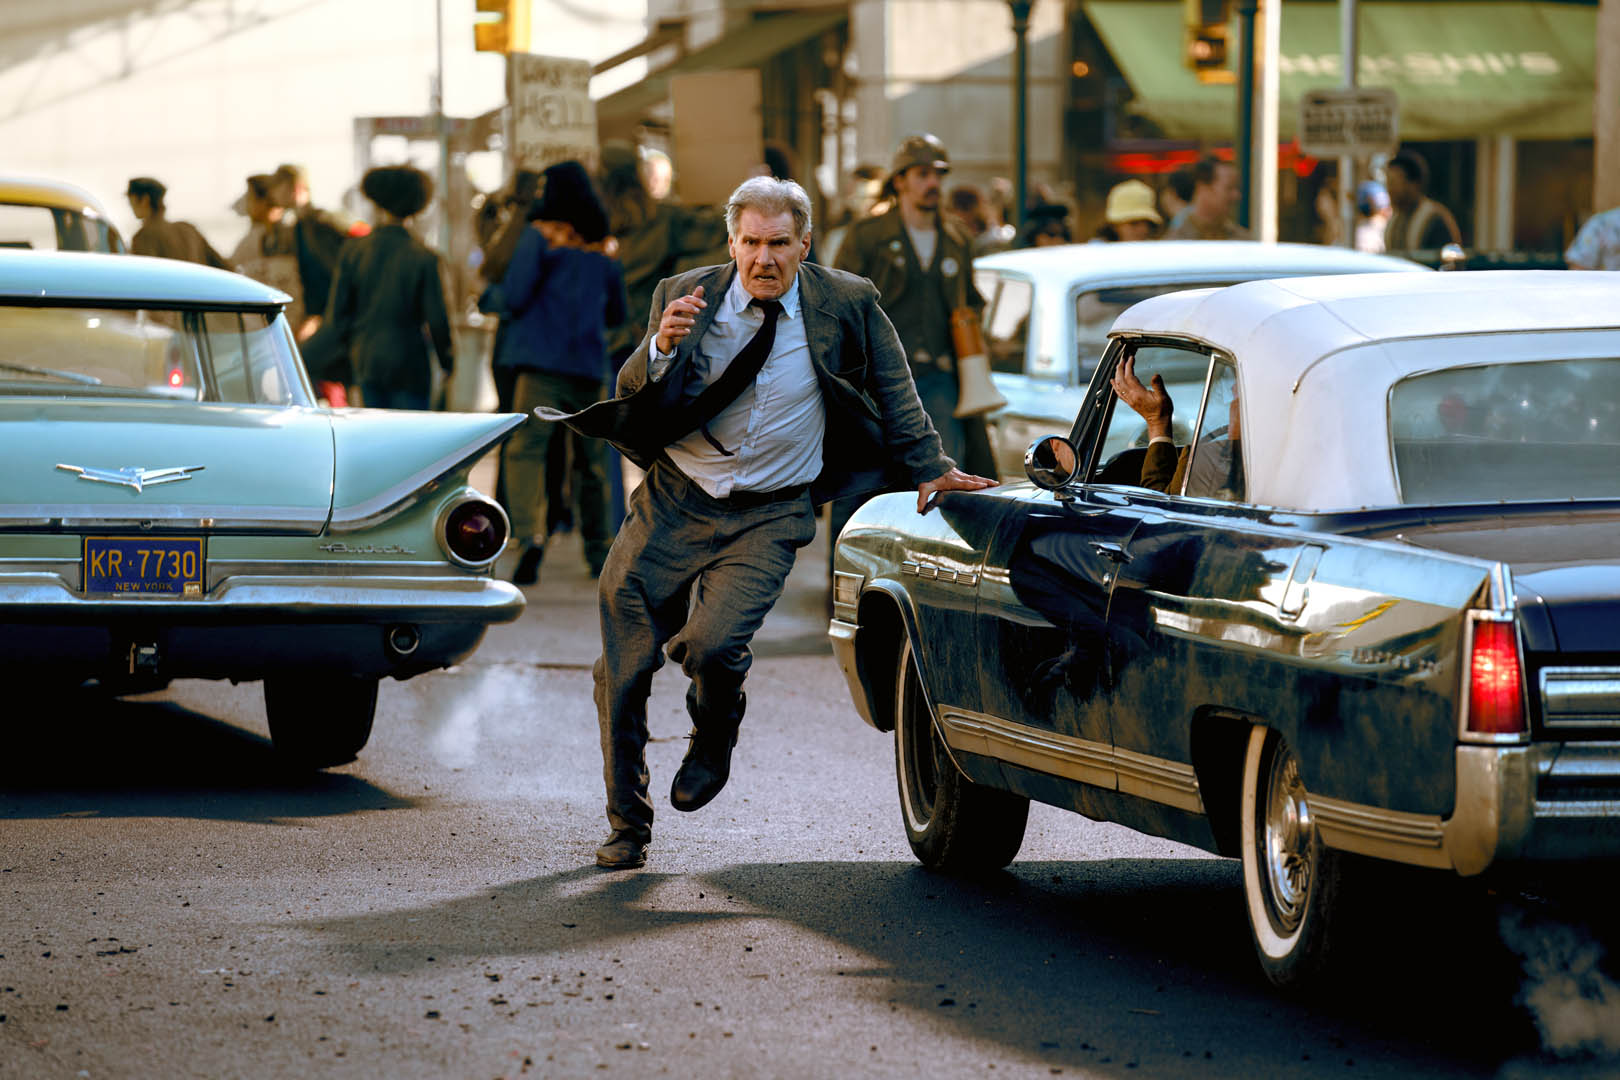 Indiana Jones runs through the streets.